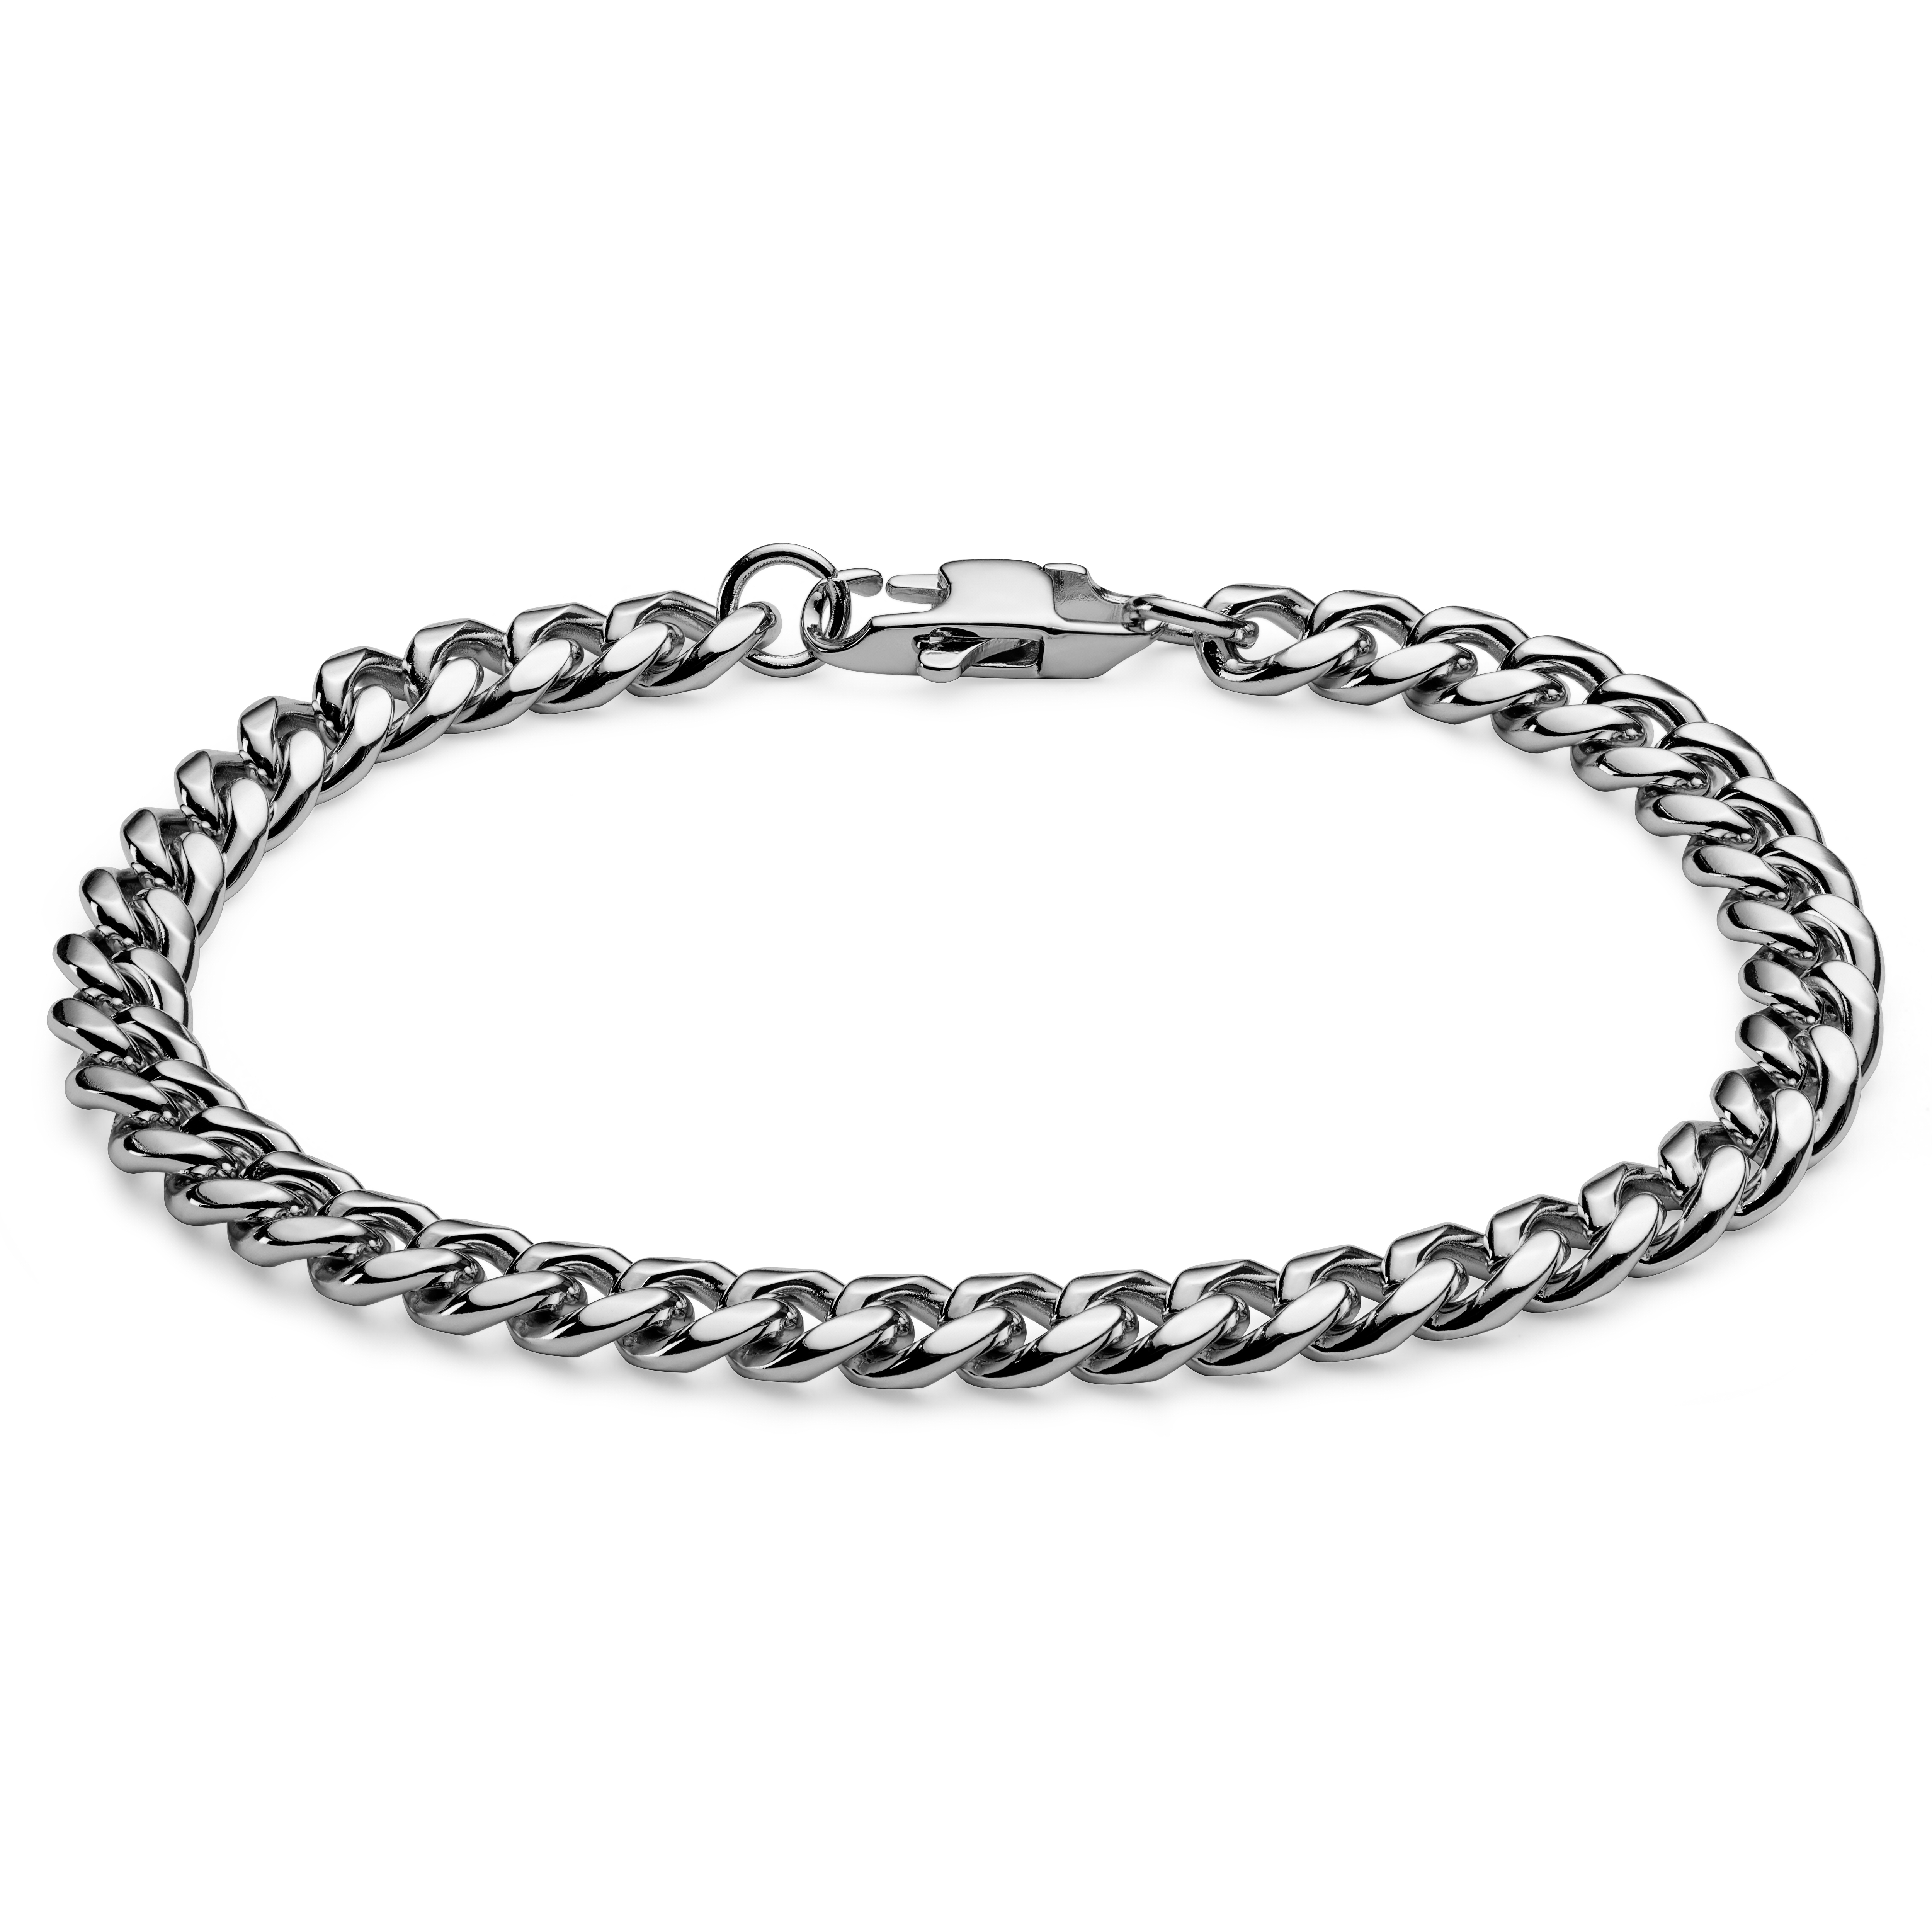 Buy Silver Metal Wrist Cuff 1 Stainless Steel Bracelet Online in India -  Etsy